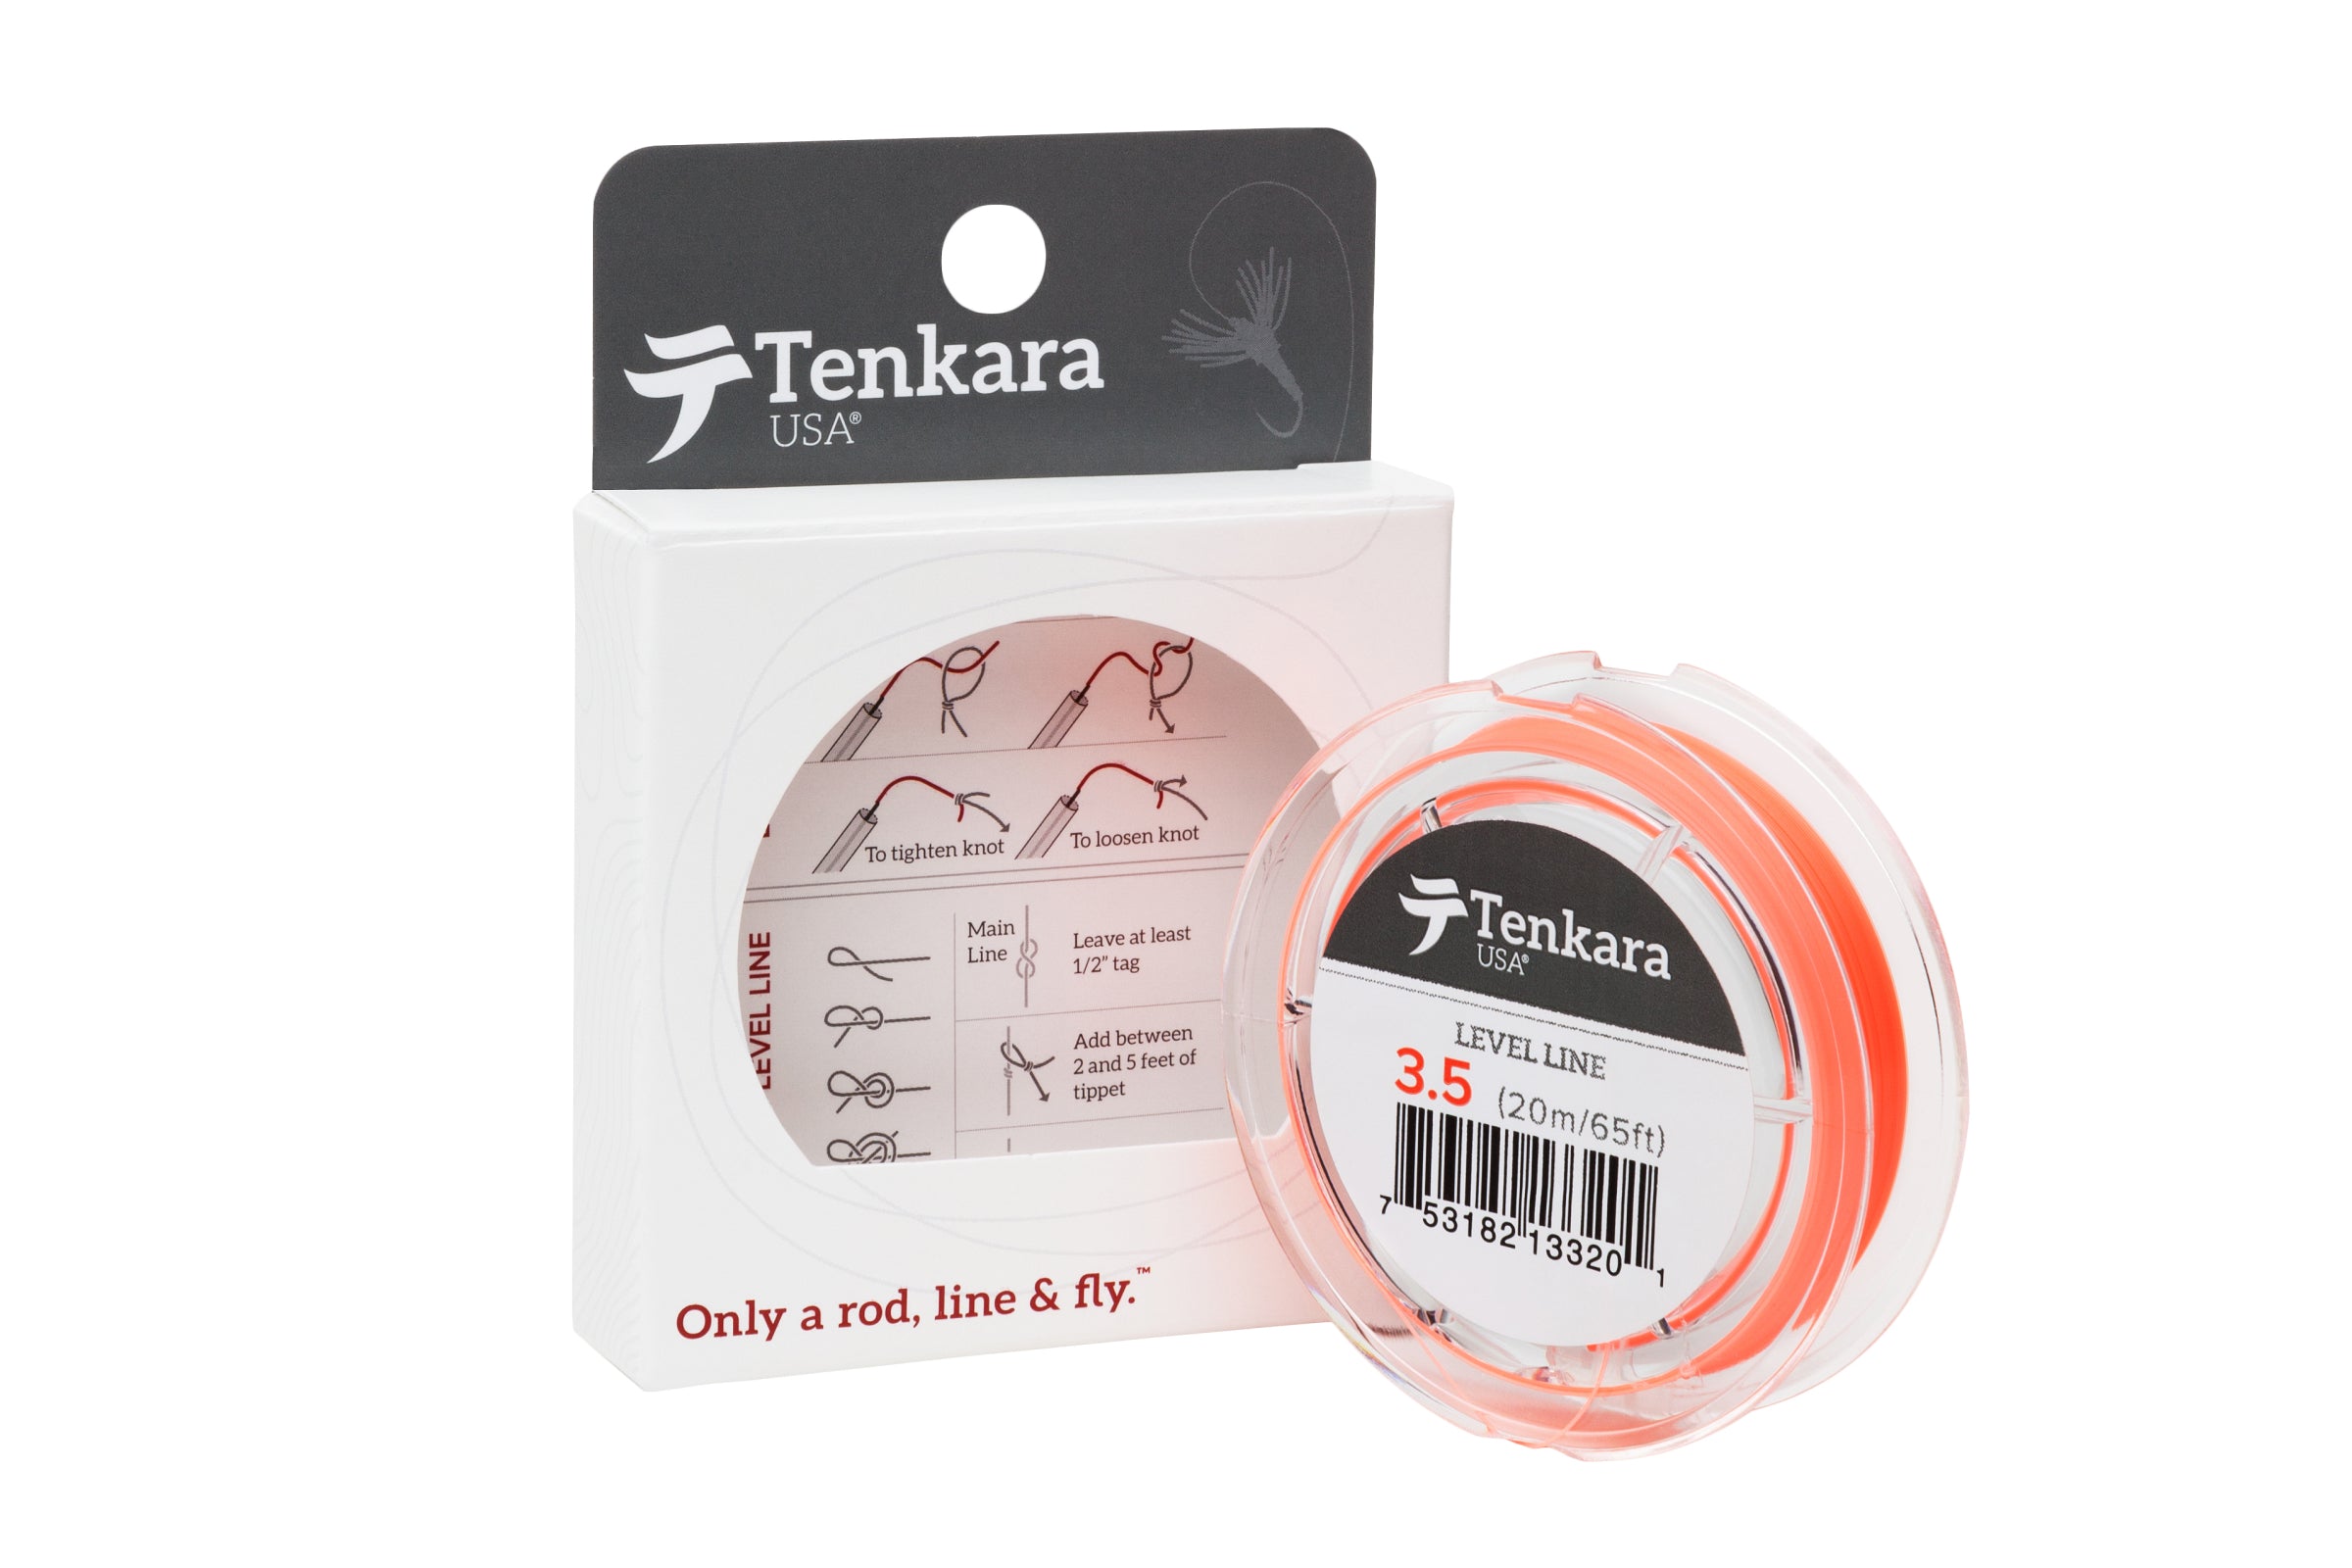 Tenkara Level Line: Choose Length of Level Line for tenkara – Tenkara USA